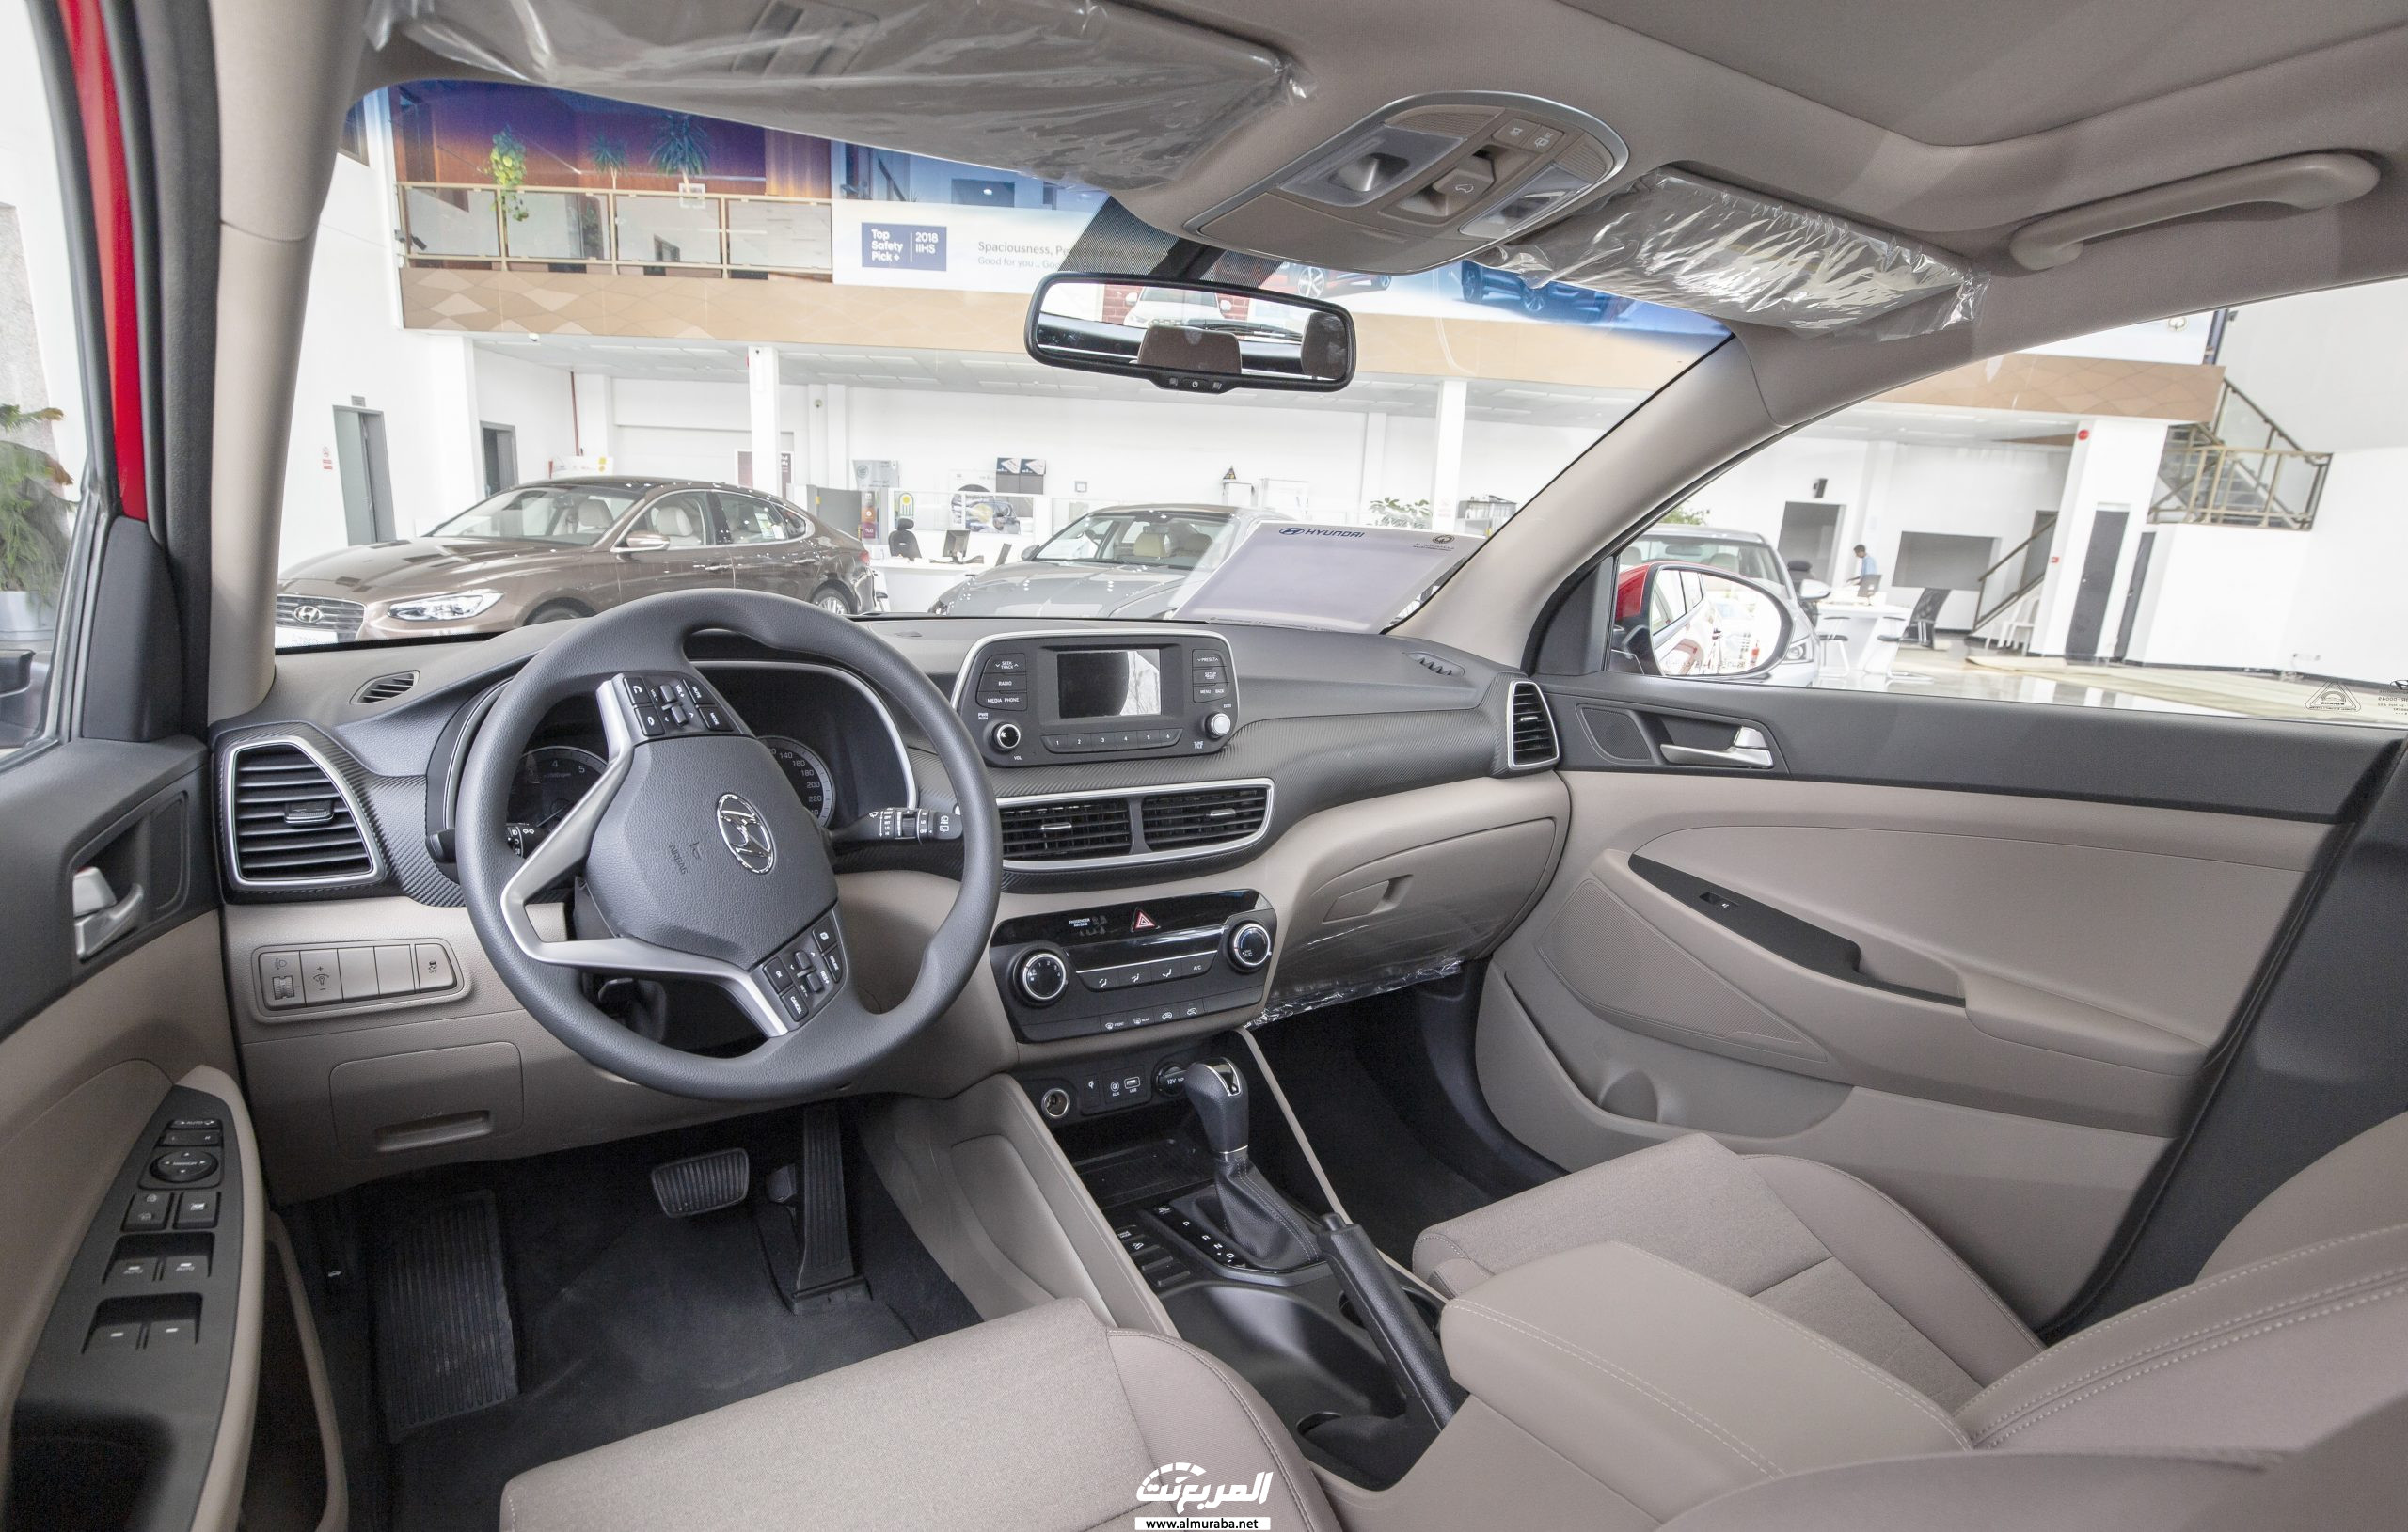 مواصفات هيونداي توسان 2020 في السعودية Hyundai Tucson 83